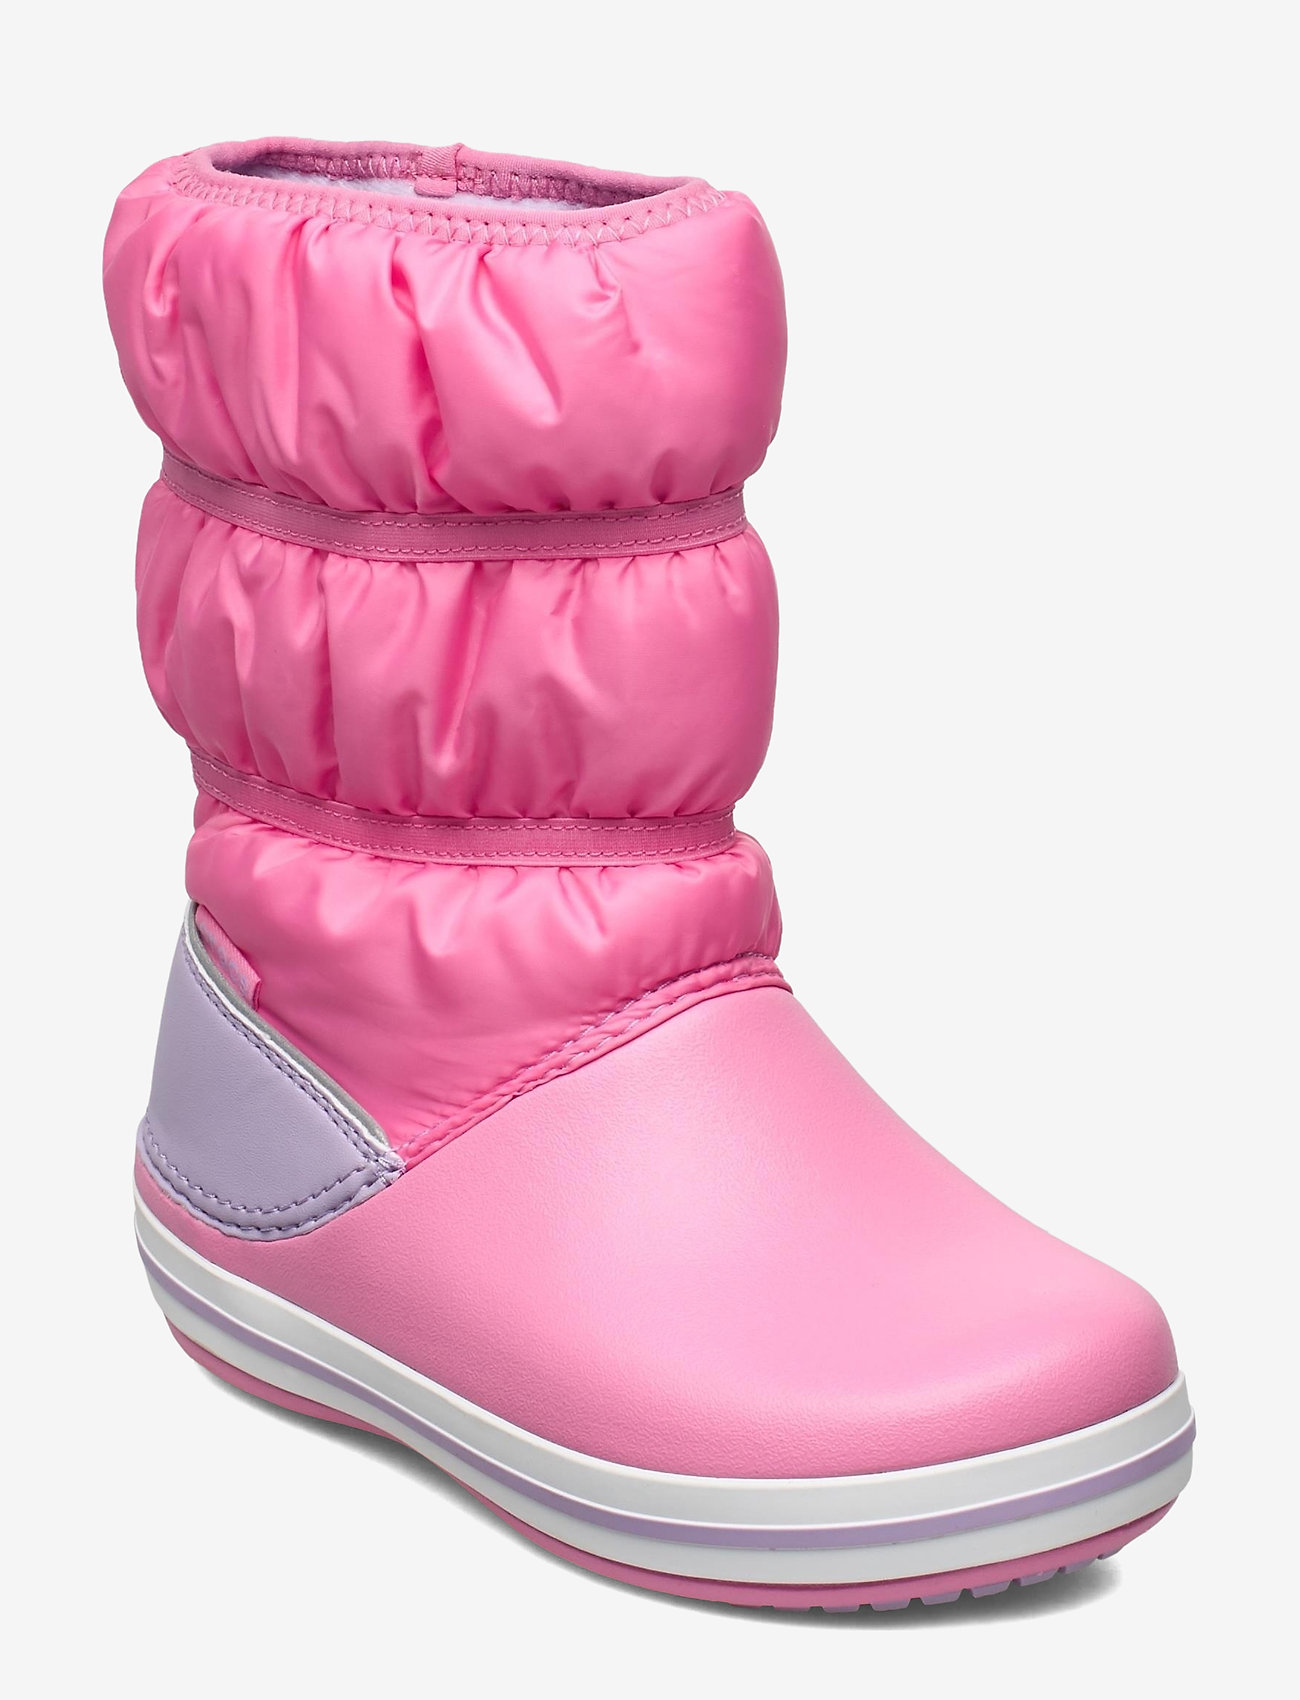 crocband boots